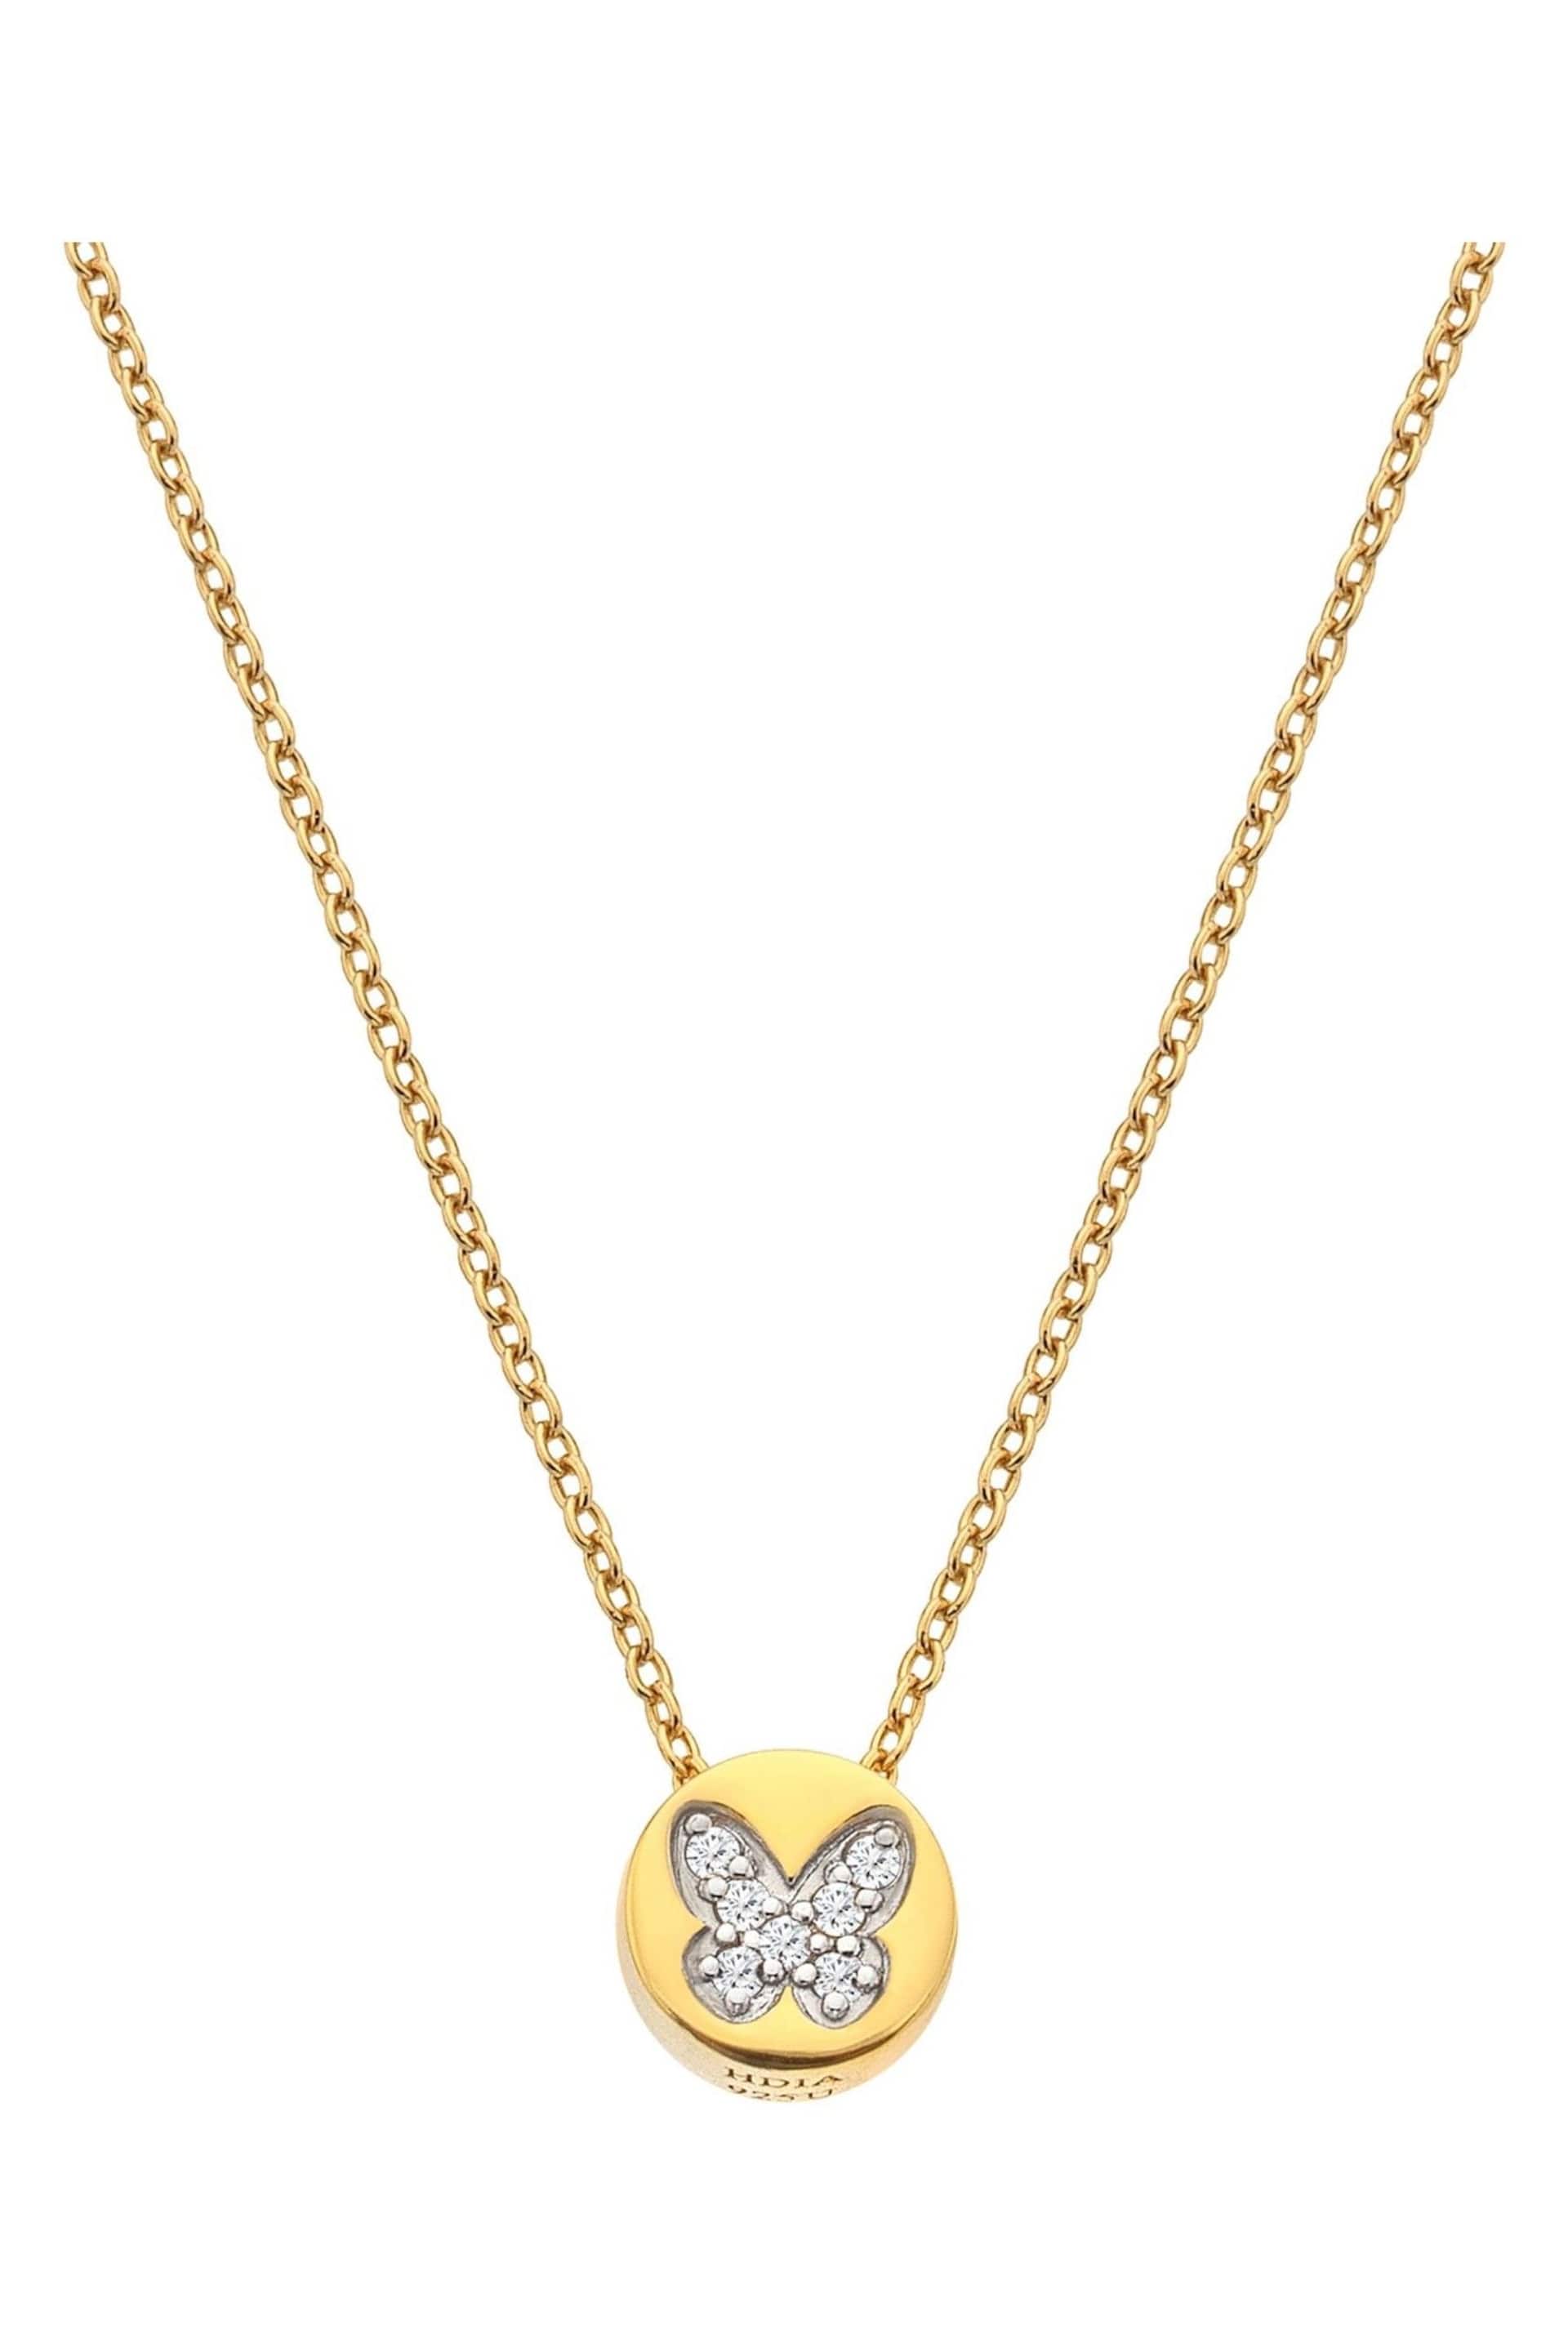 Hot Diamonds X JJ Gold Tone Butterfly Necklace - Image 1 of 3